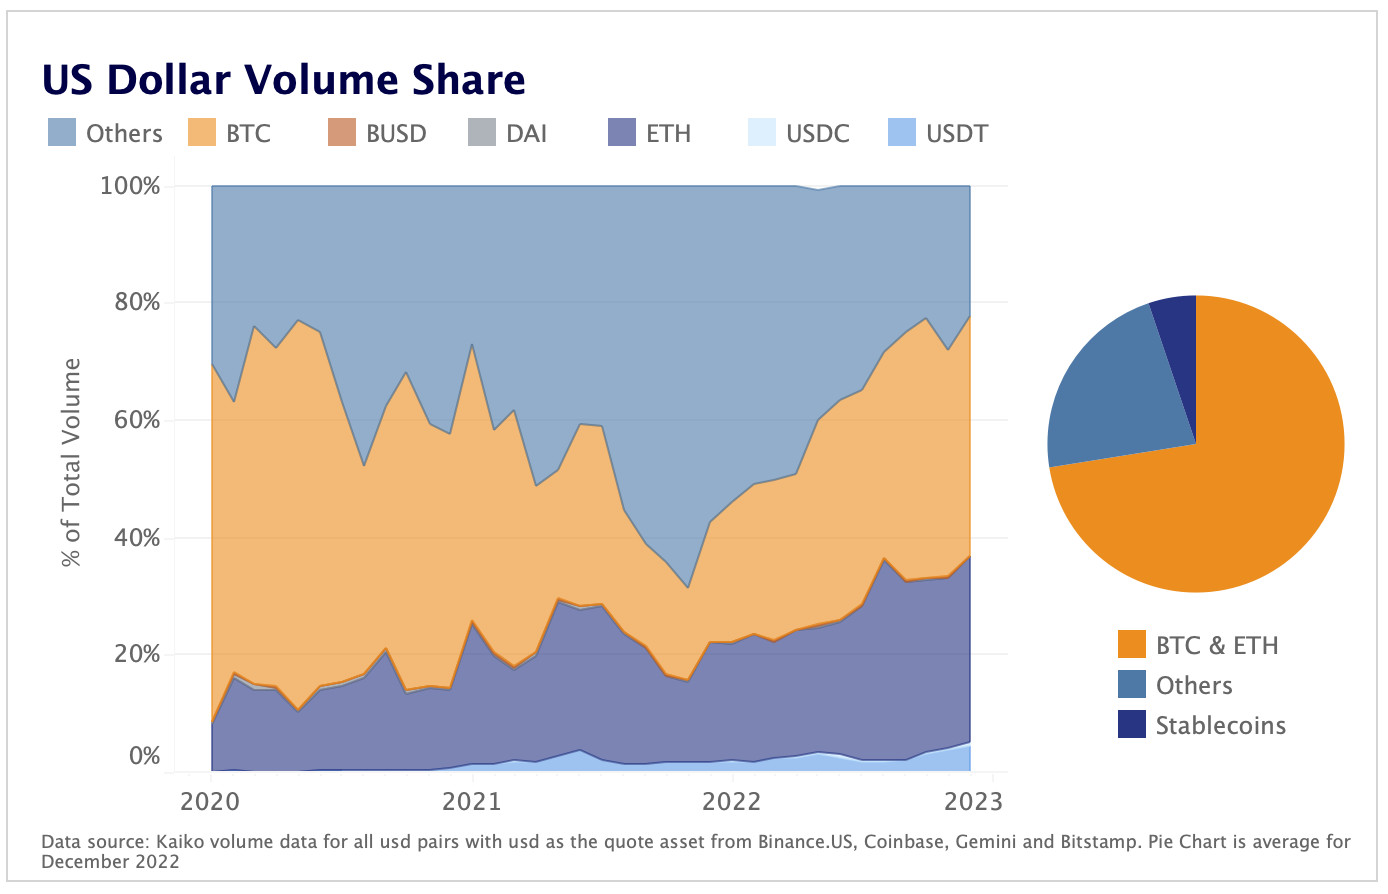 USD volume share